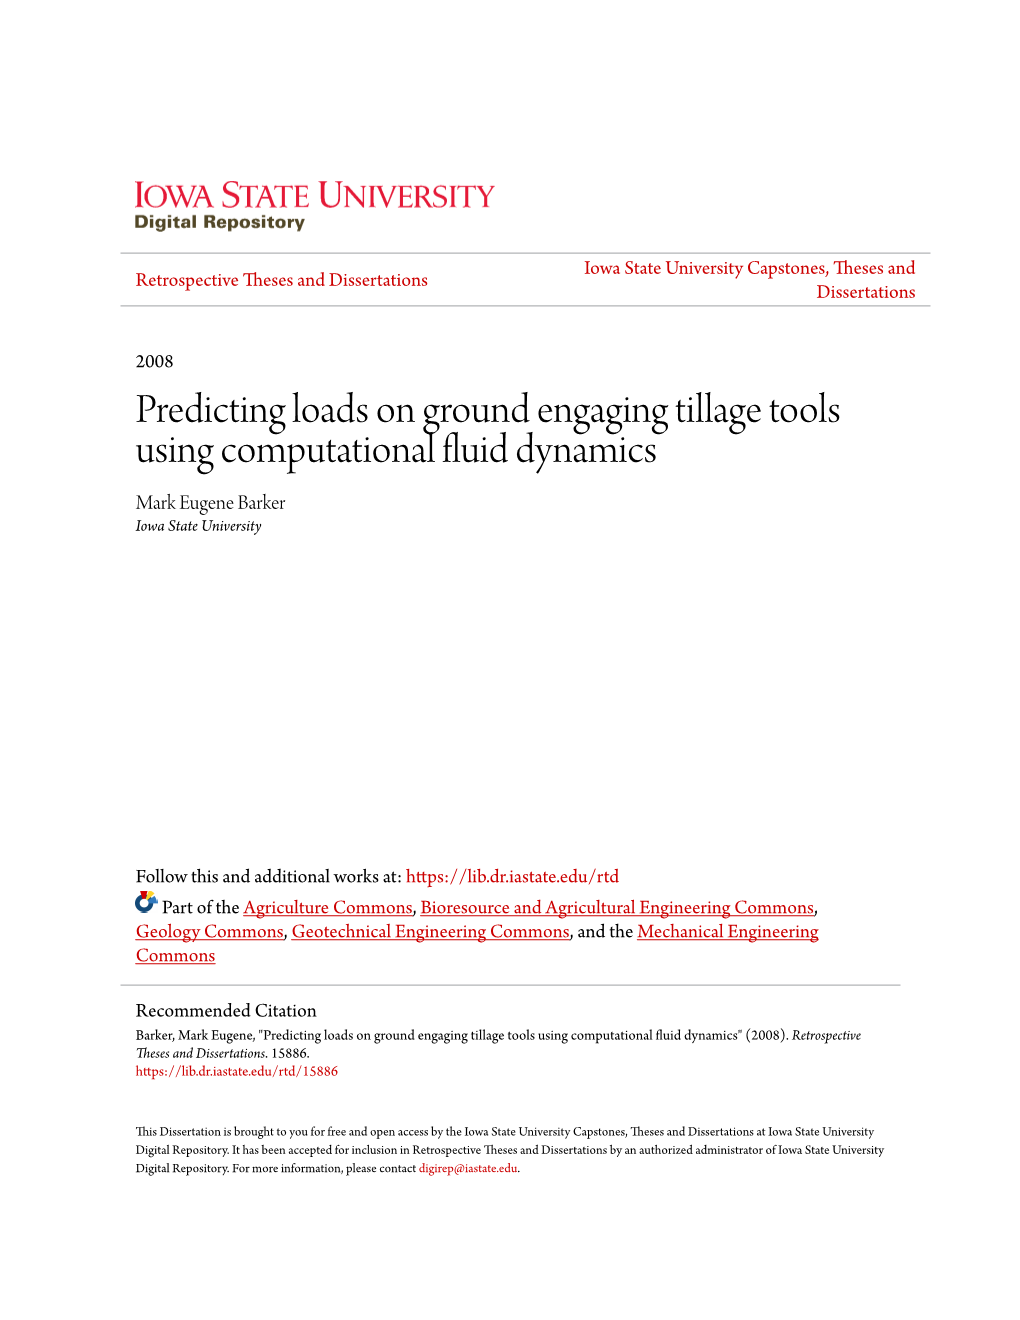 Predicting Loads on Ground Engaging Tillage Tools Using Computational Fluid Dynamics Mark Eugene Barker Iowa State University